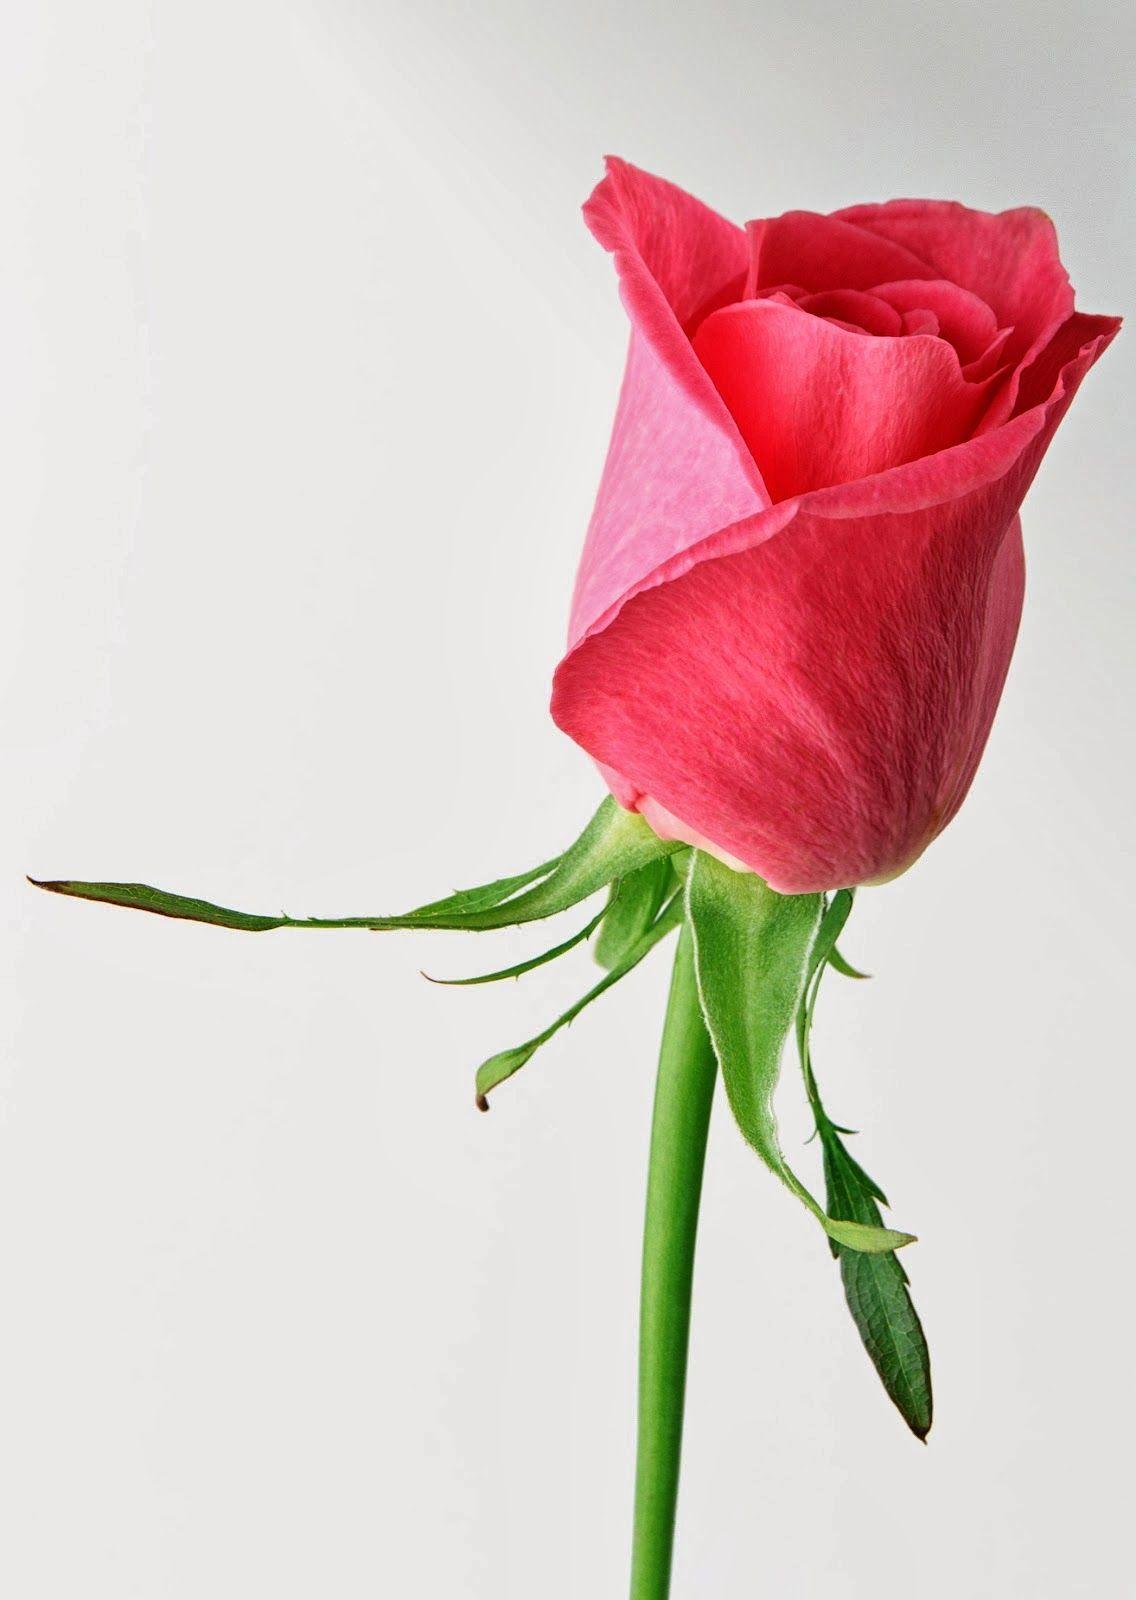 Free Wallpaper Red Rose Love single 2014. My Rose